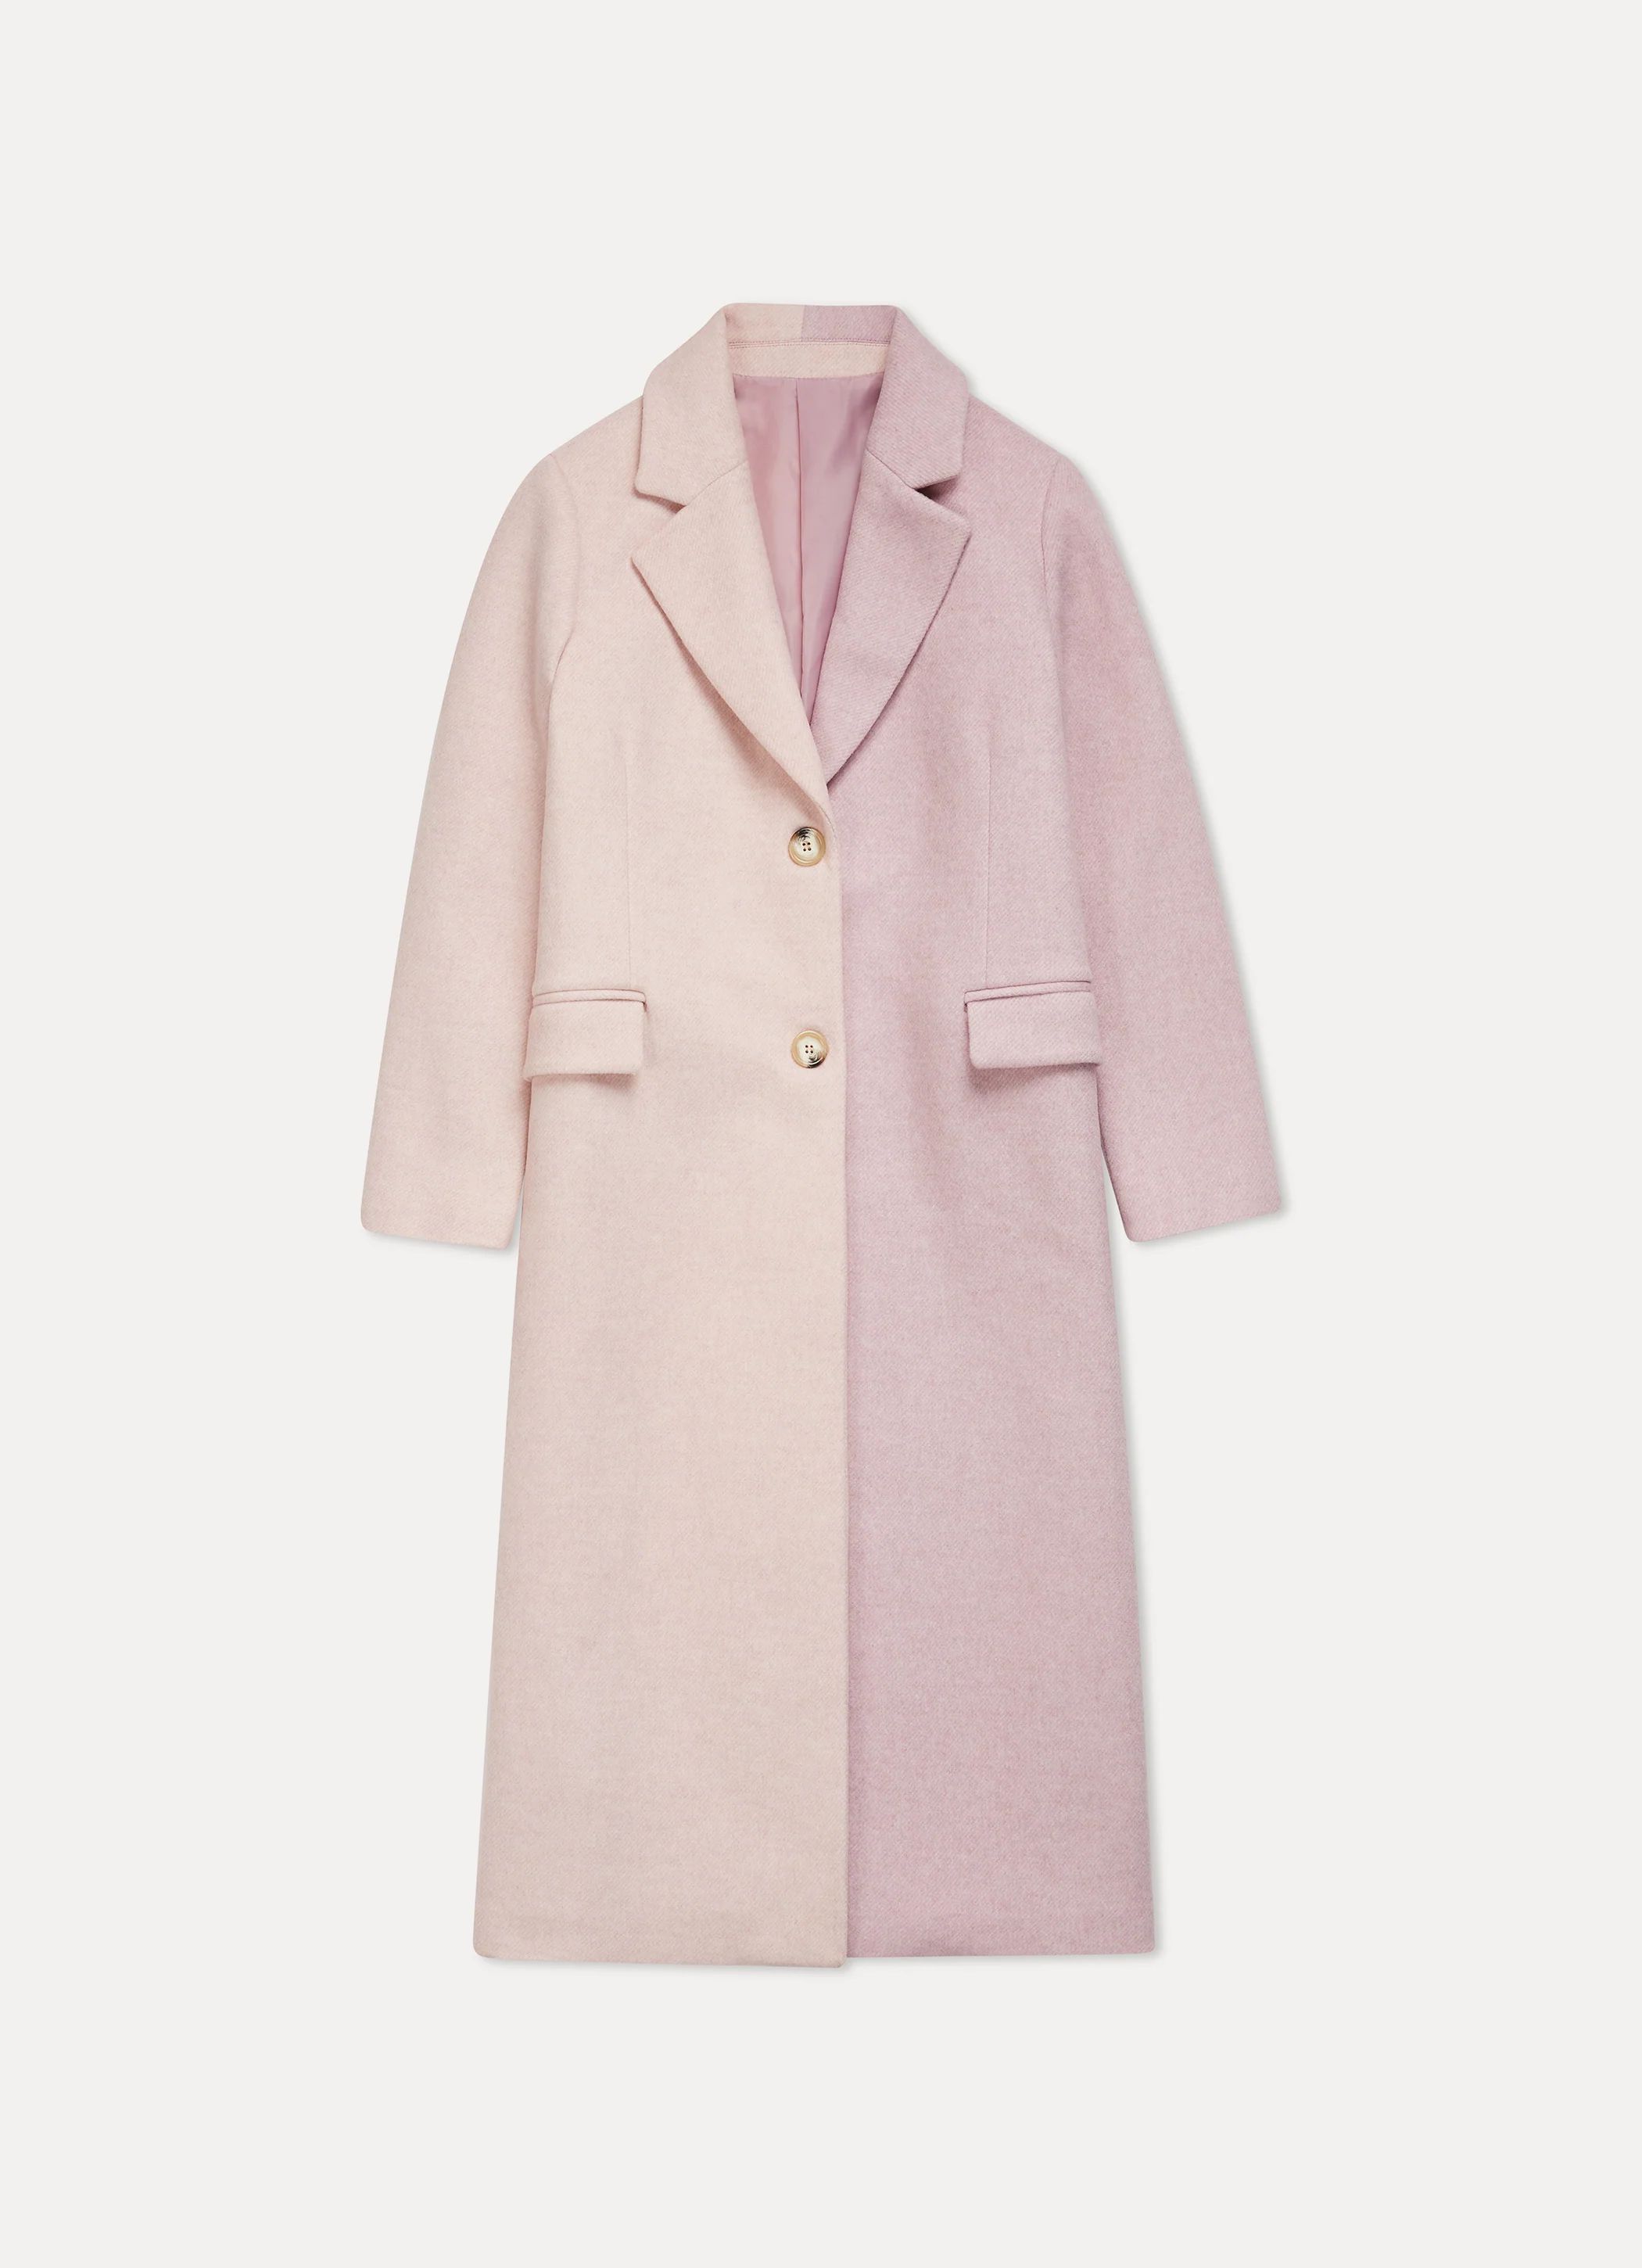 Two Tone Coat Pink Combo | Something Navy | Something Navy